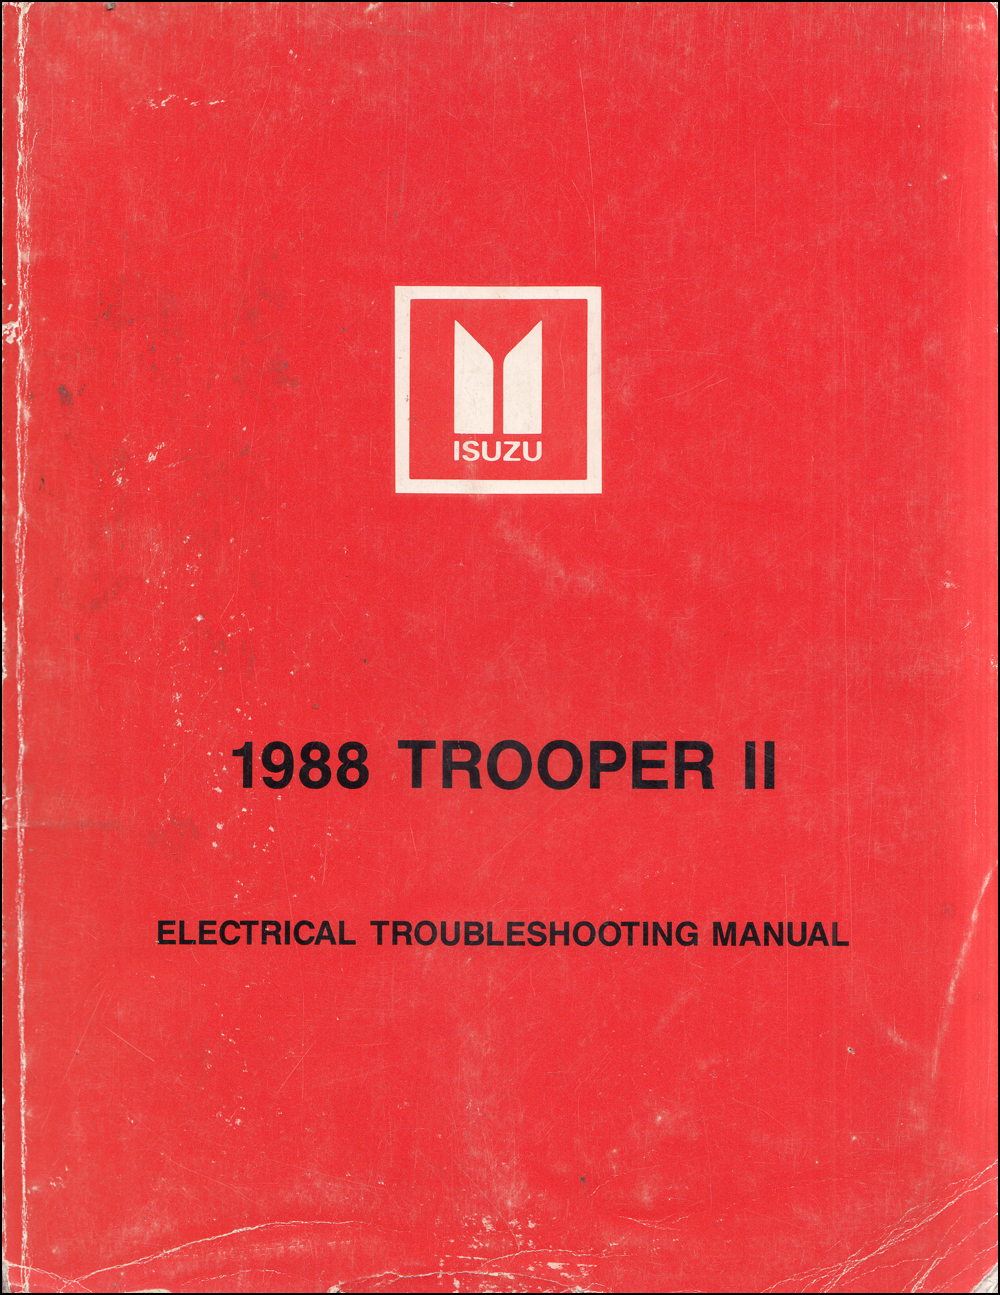 1988 Isuzu Trooper II Electrical Troubleshooting Manual Original